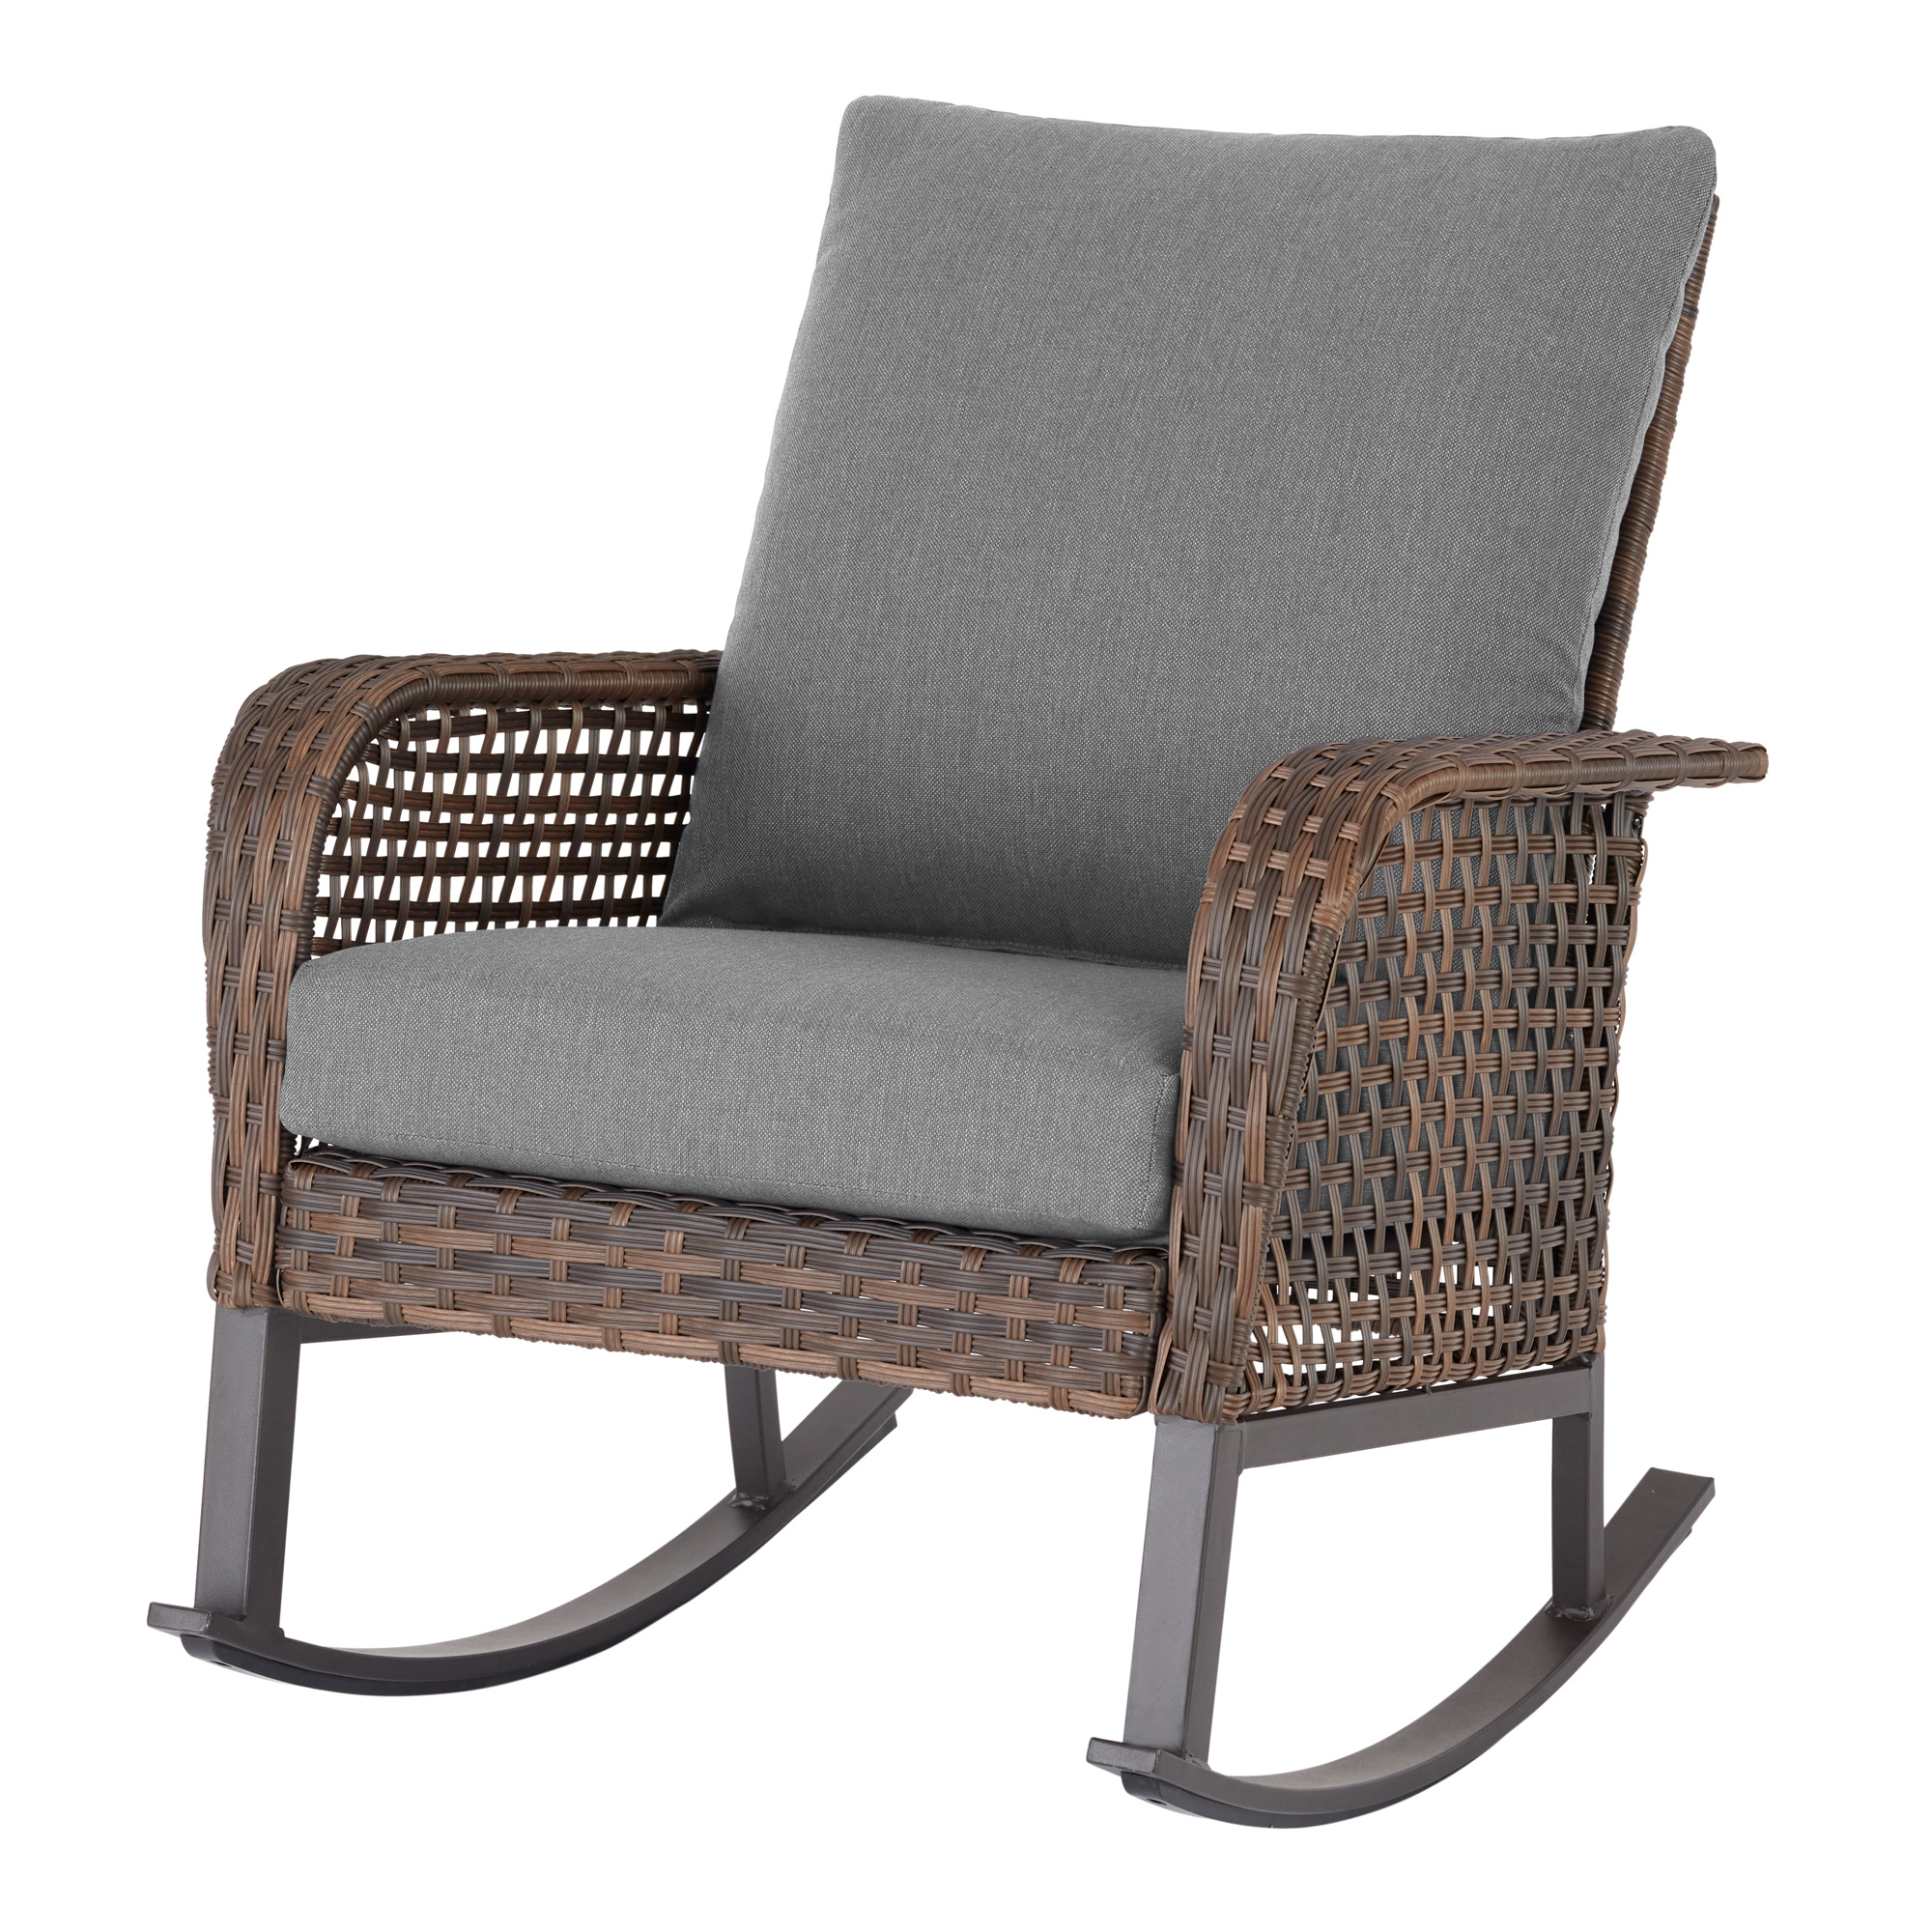 Mainstays Tuscany Ridge 3-Piece Wicker Rocking Chair Outdoor Bistro Set, Dark Gray - image 4 of 9